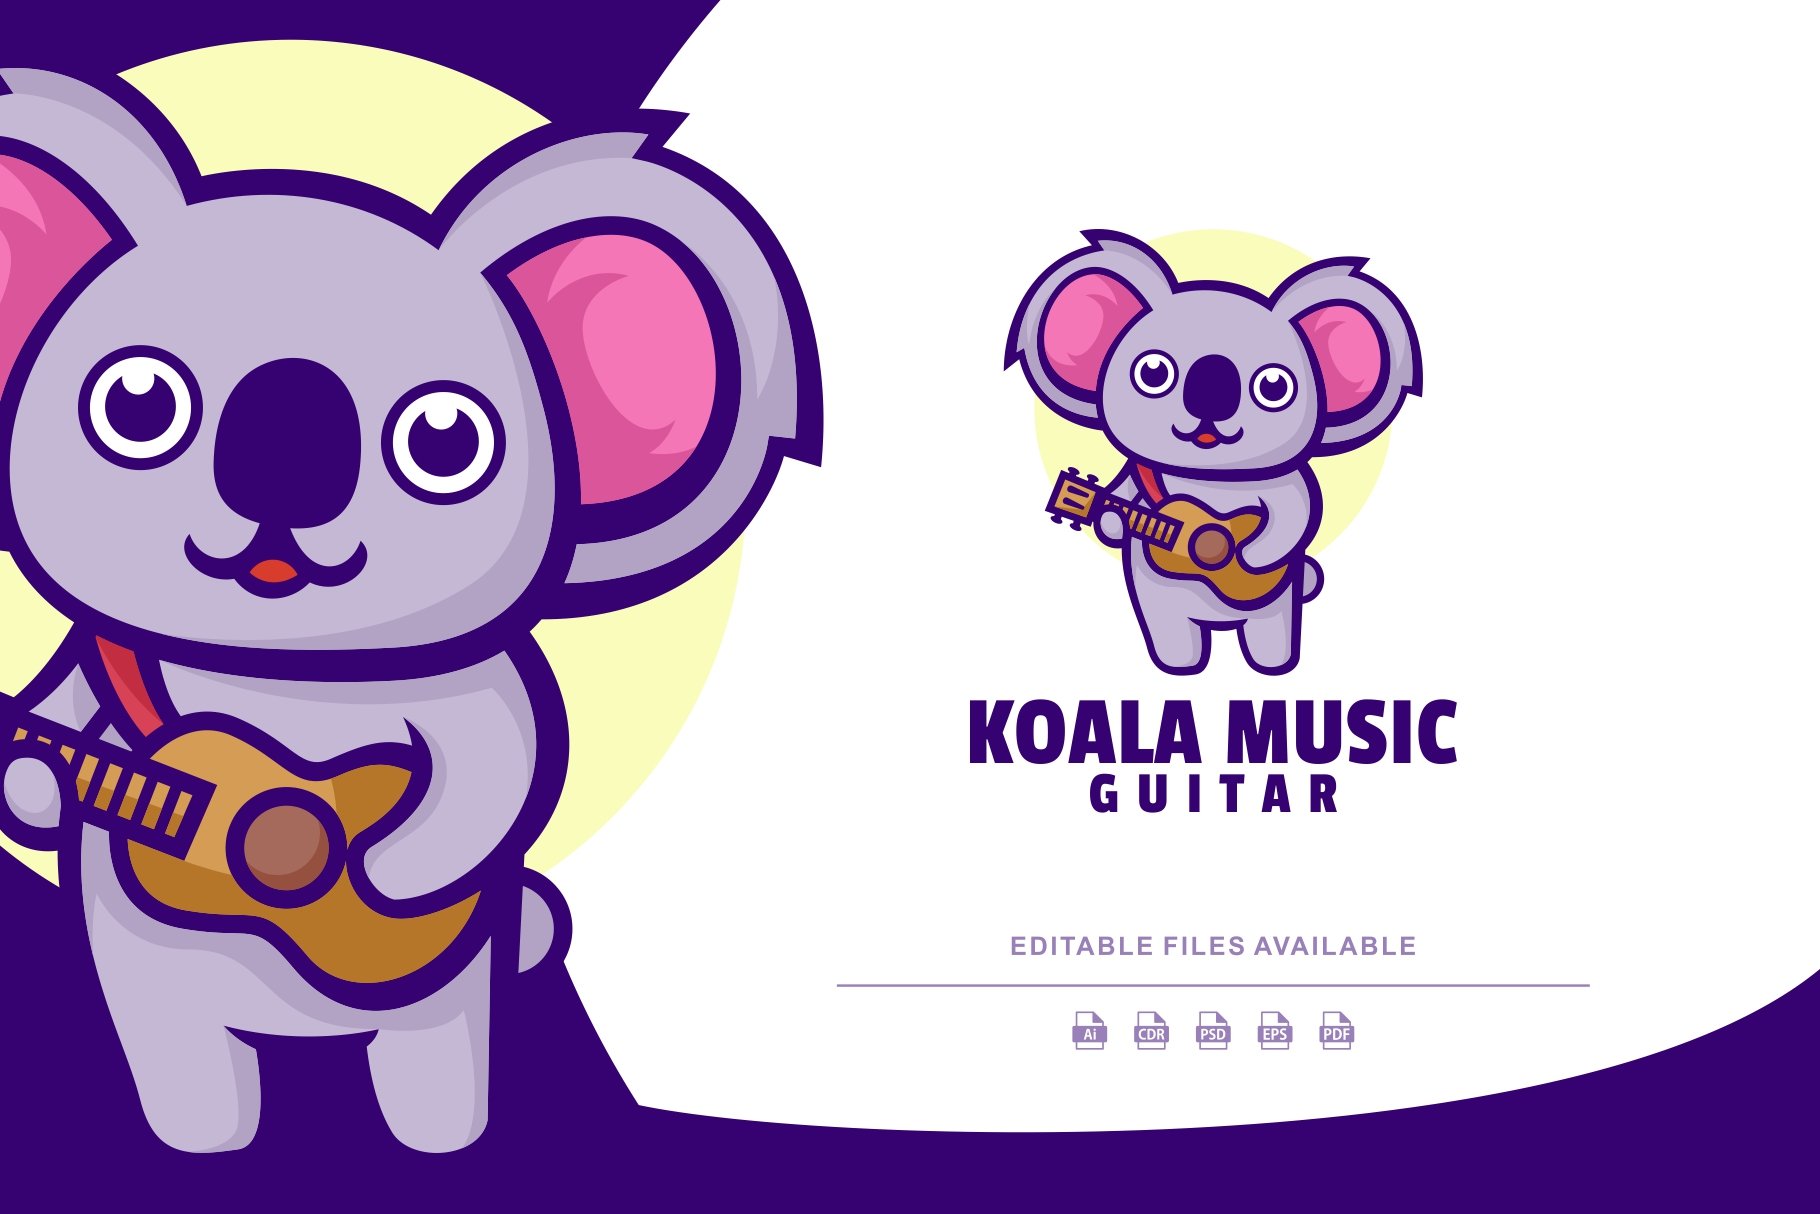 Koala Music Mascot Cartoon Logo cover image.